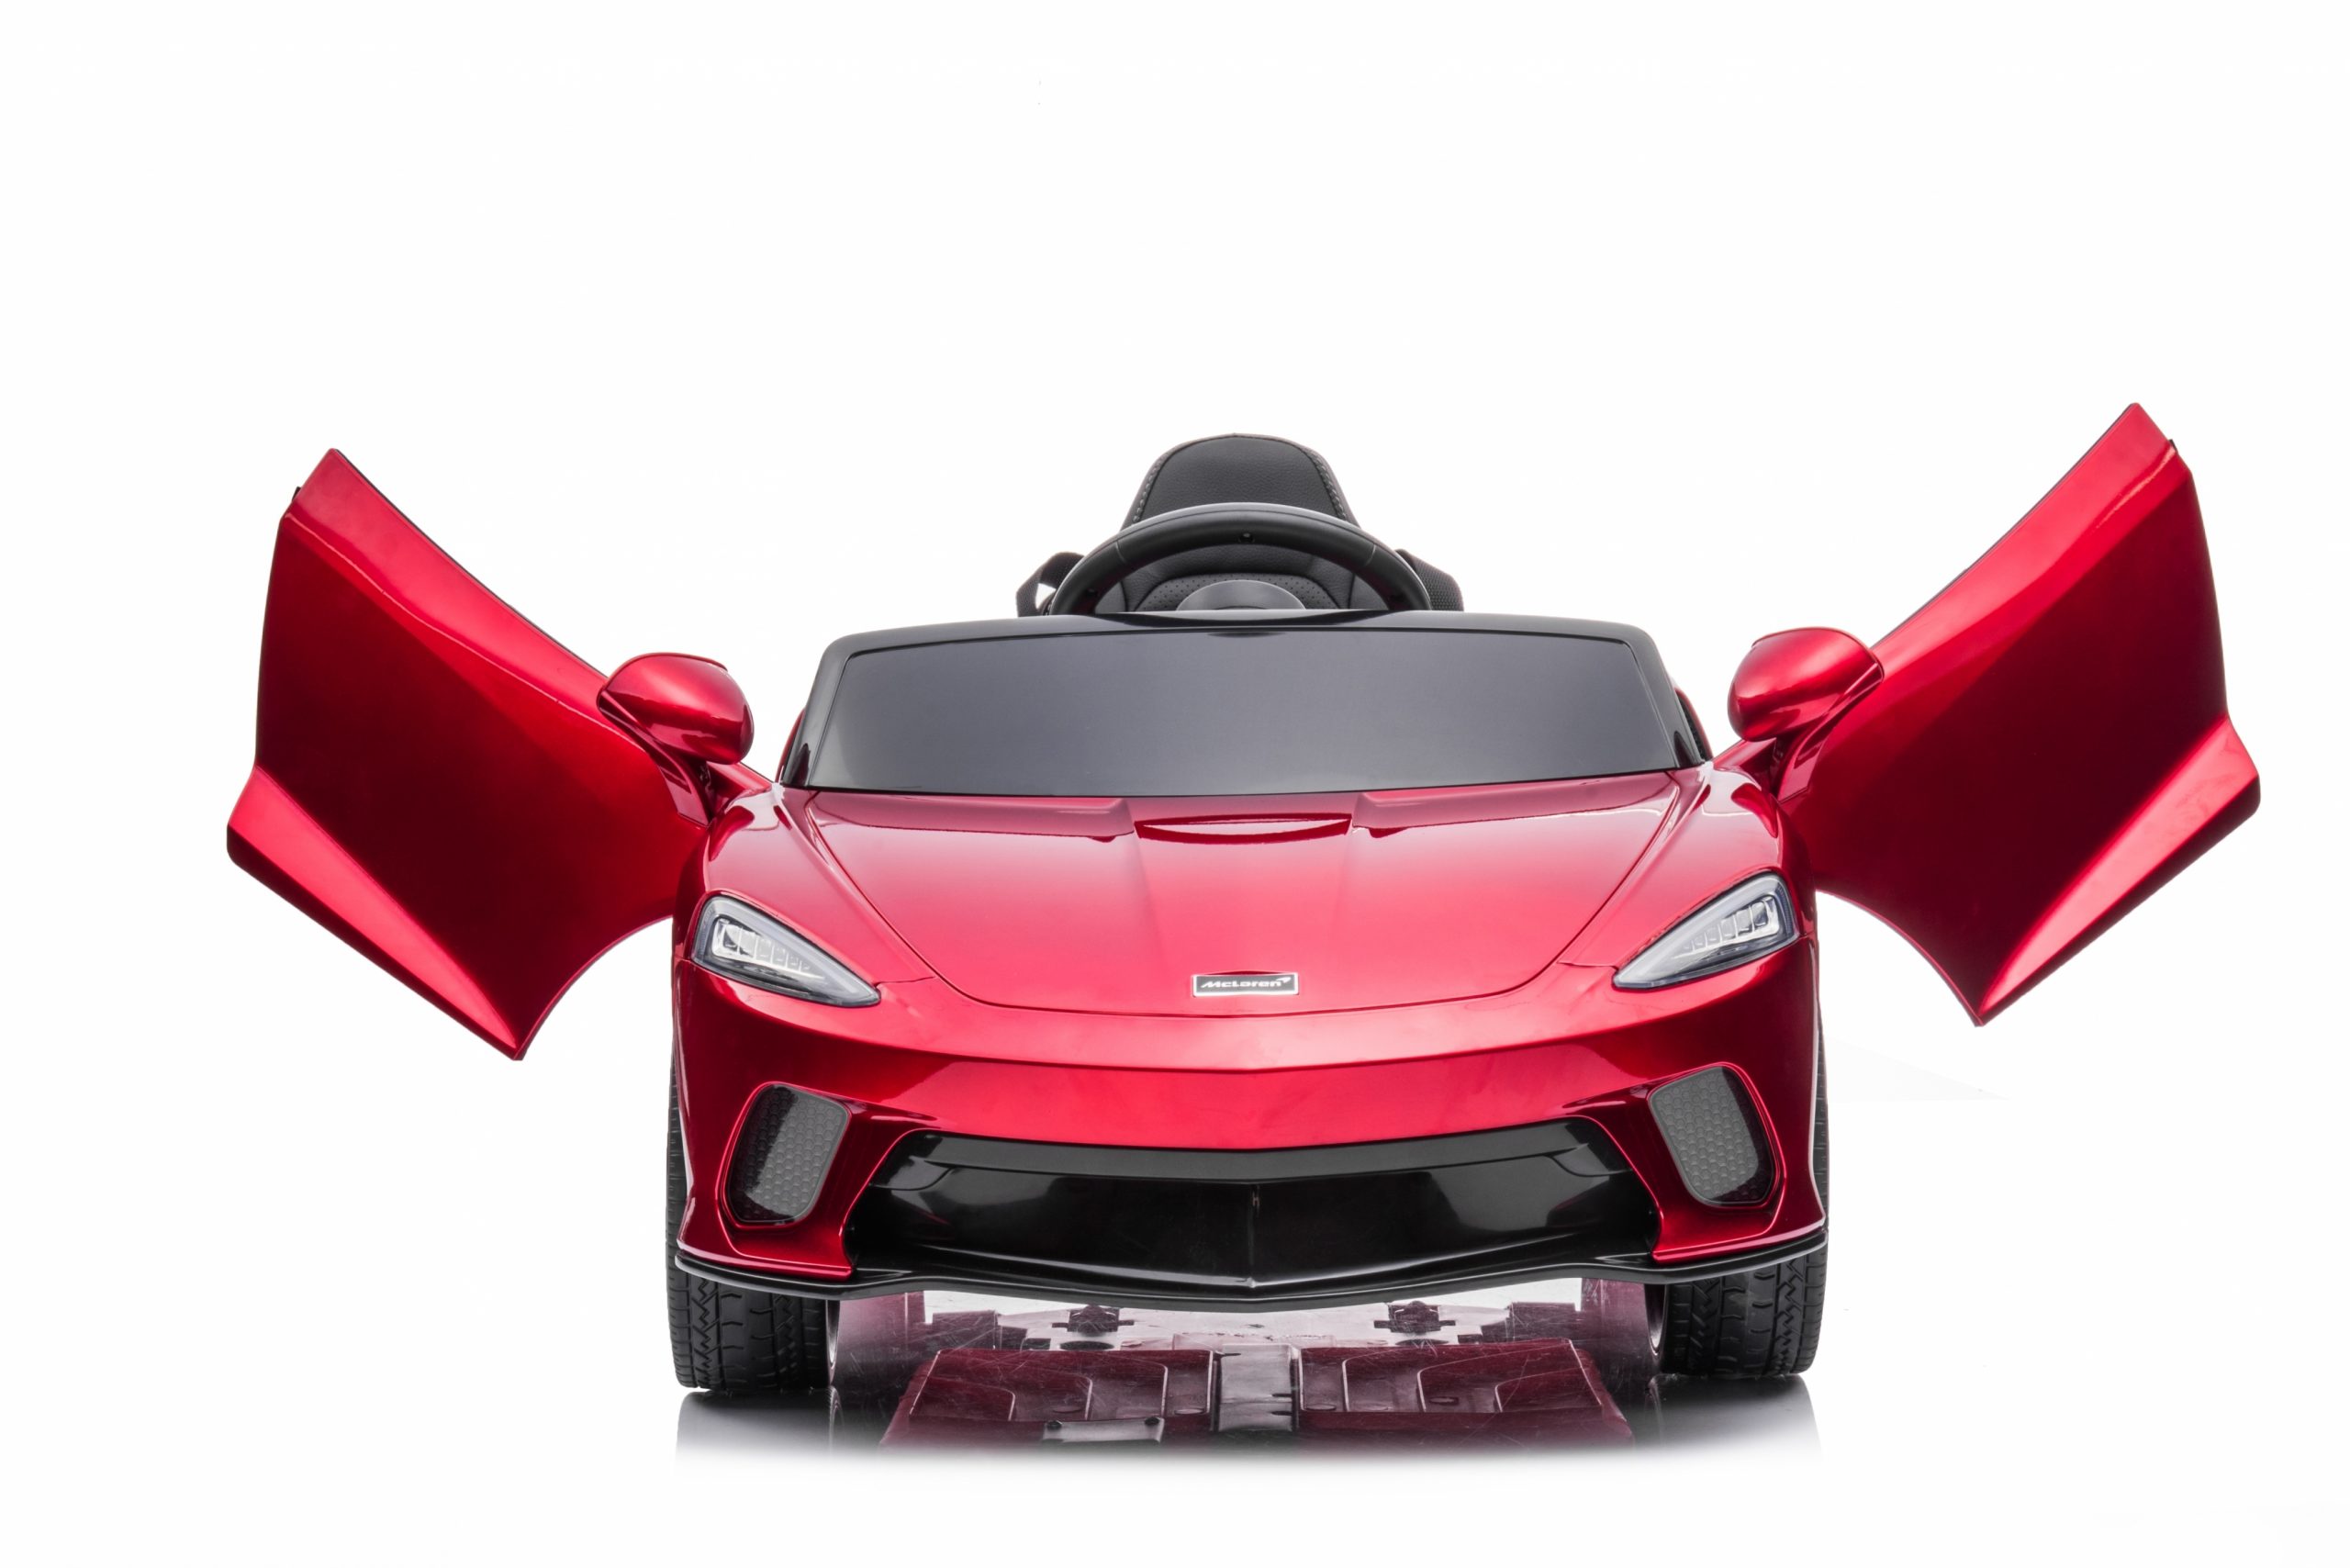 New McLaren GT ride-on toy